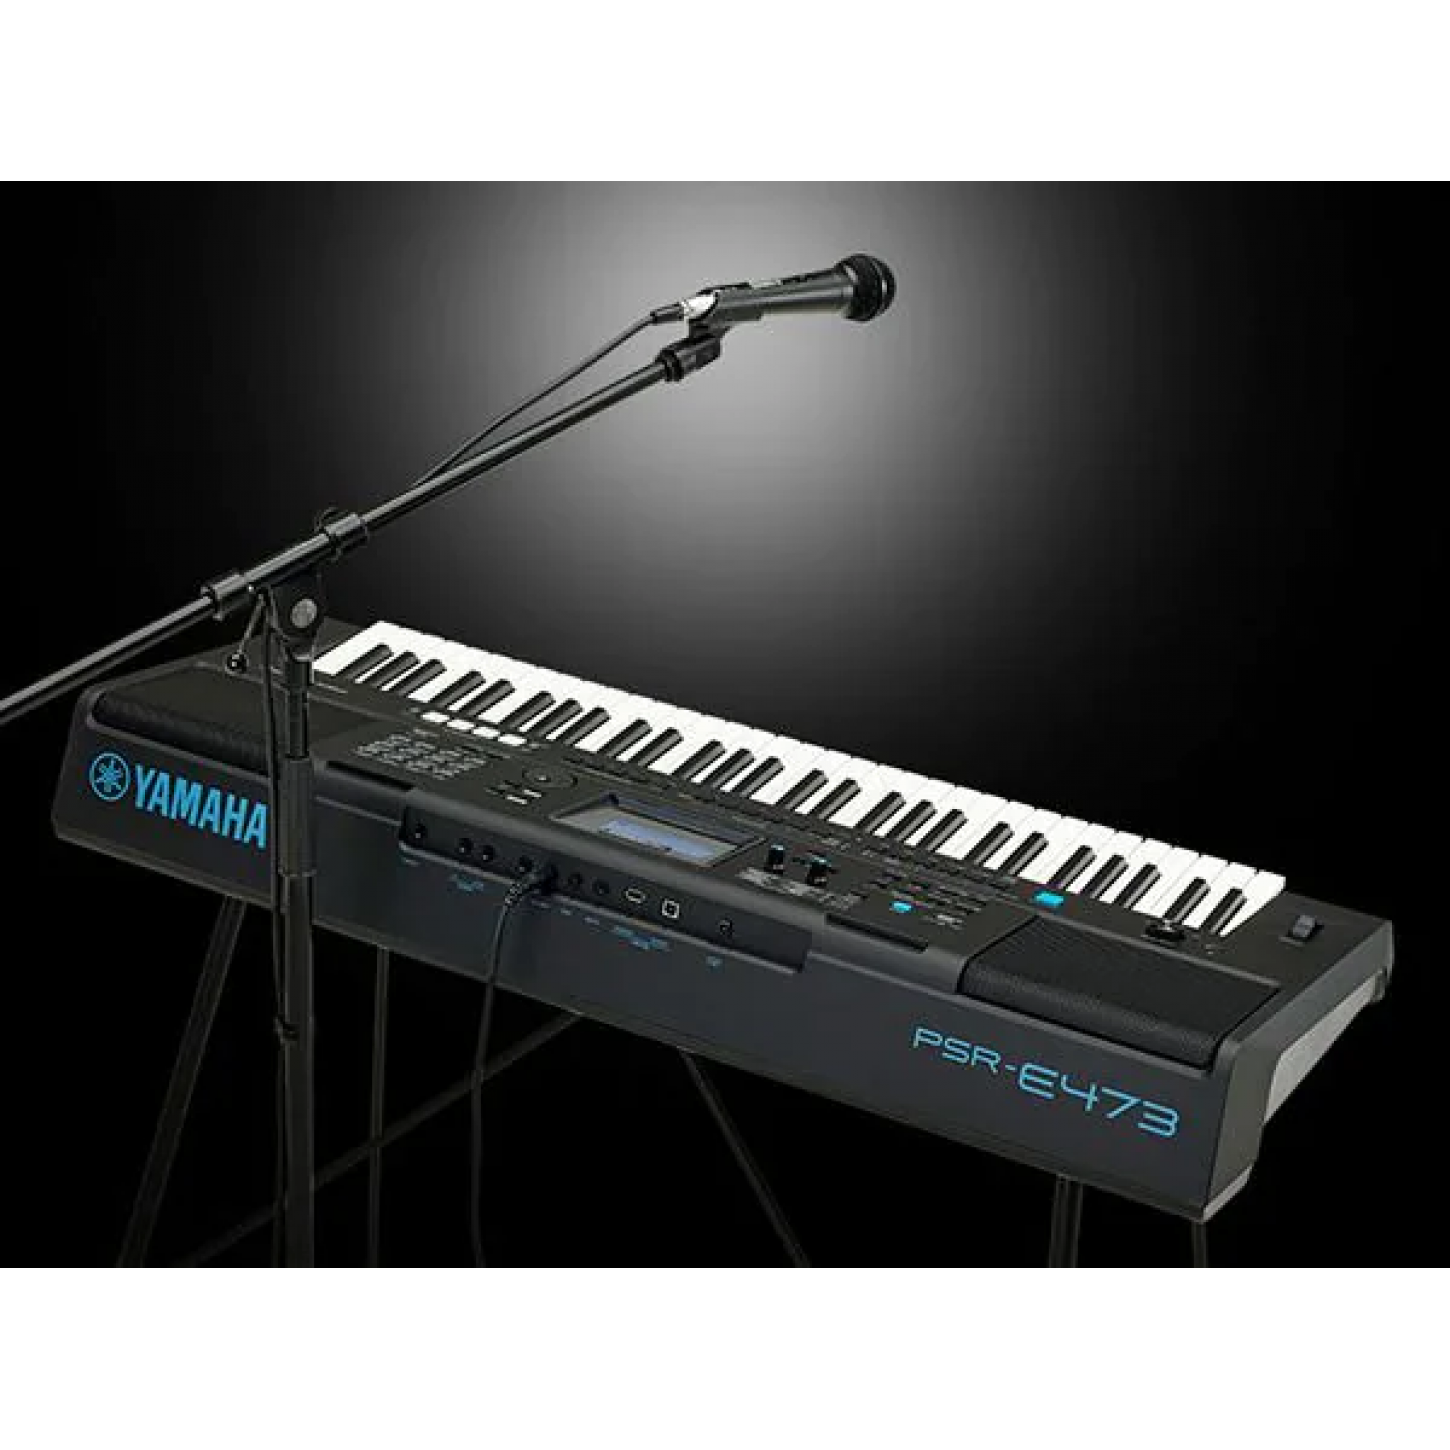 Yamaha exibe teclado musical que emula vozes humanas